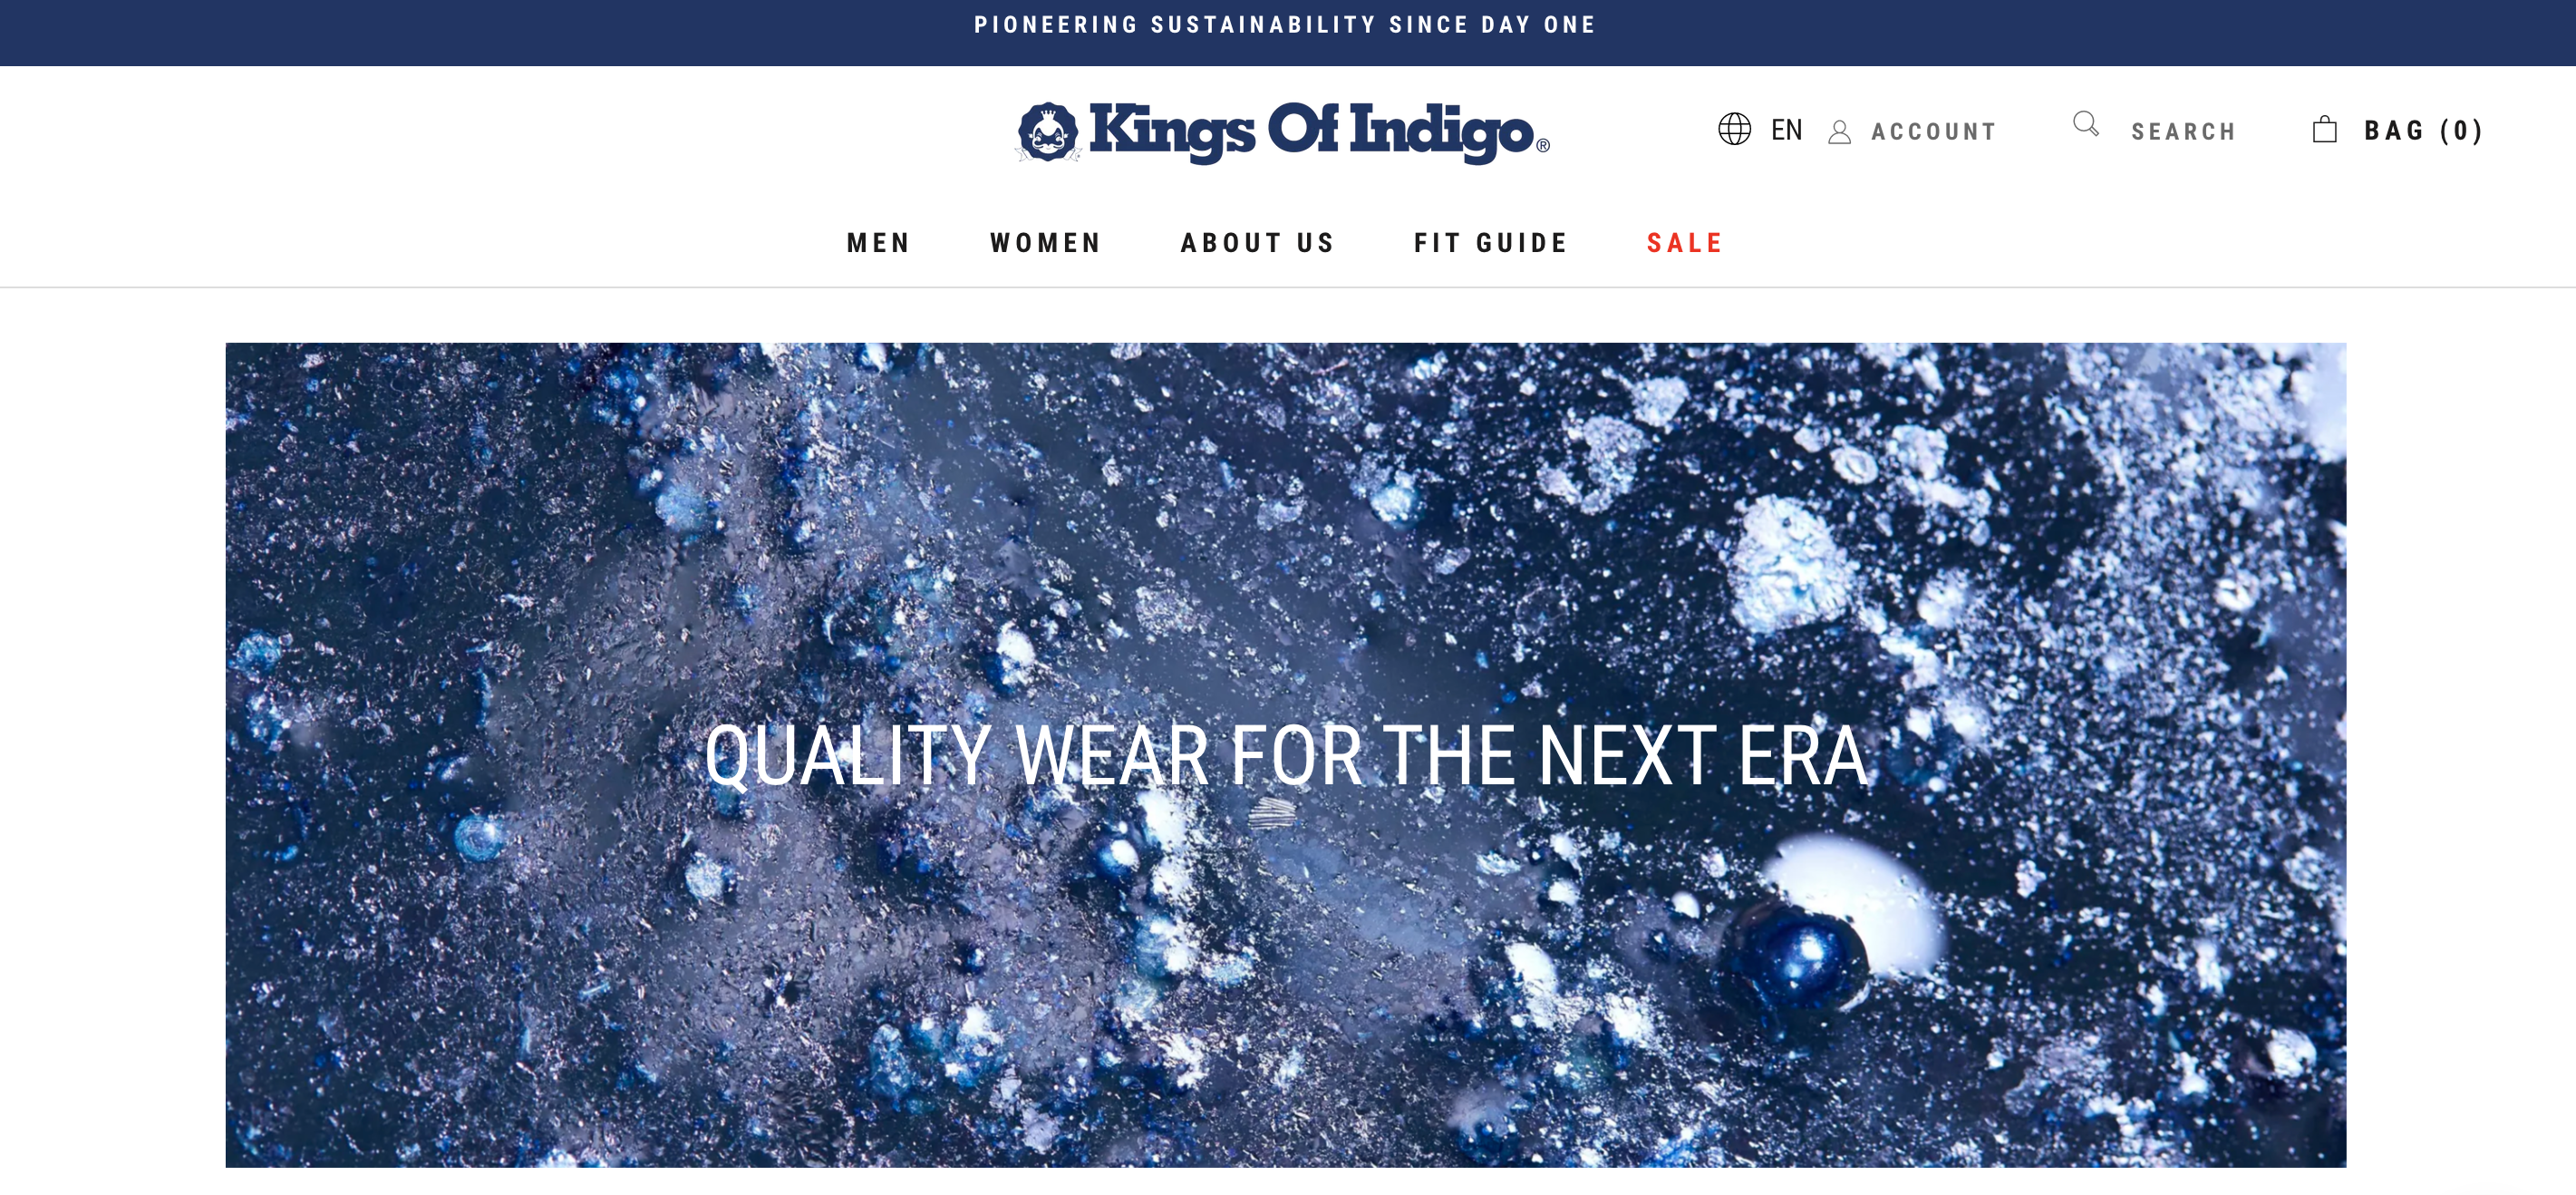 Dutch Sustainable Denim Brand Kings of Indigo Taken Over by German Entrepreneurial Couple